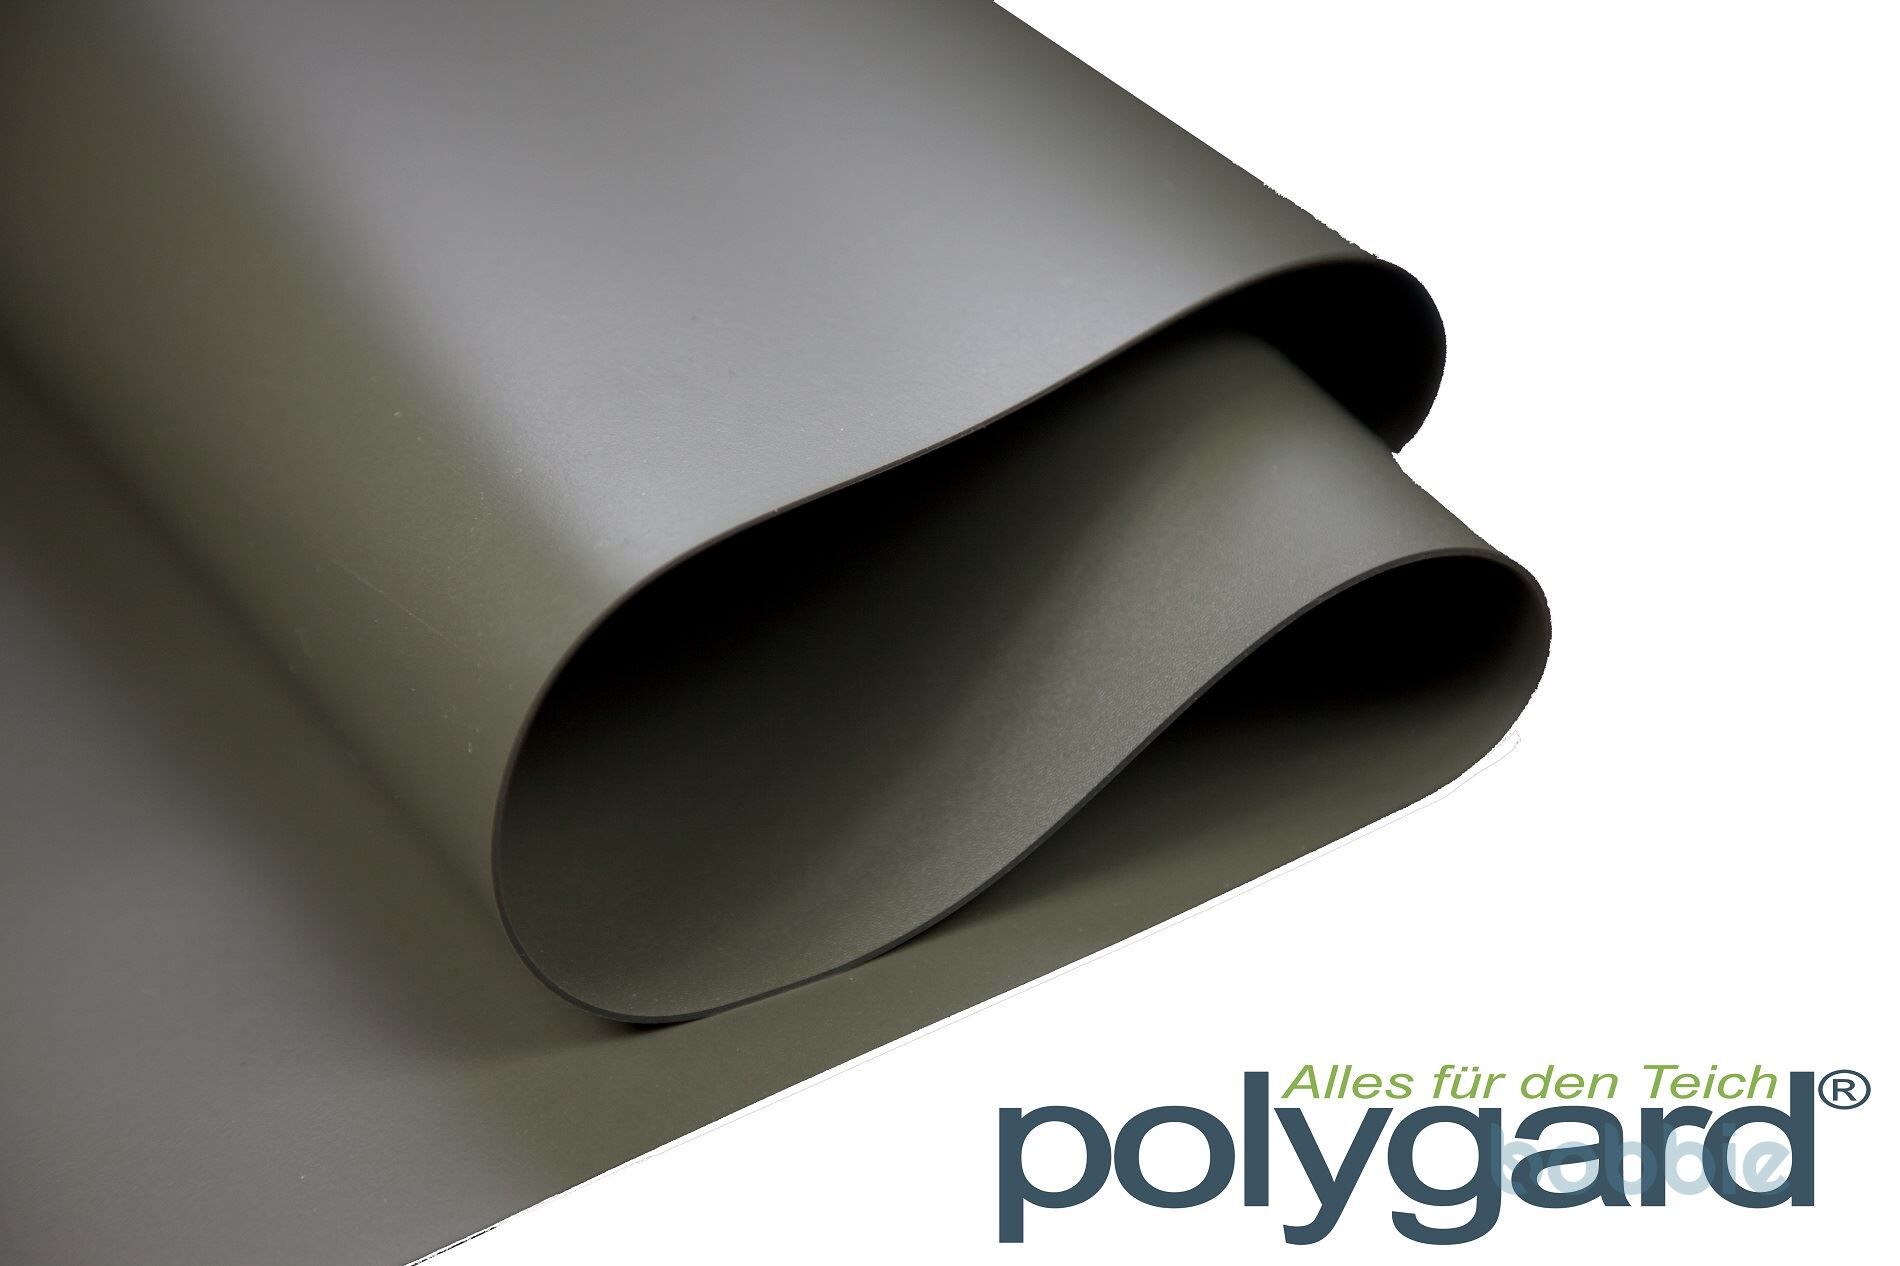 Polygard PVC Teichfolie 1,5mm oliv-grün PrePack - 8,0 x 9,5 m